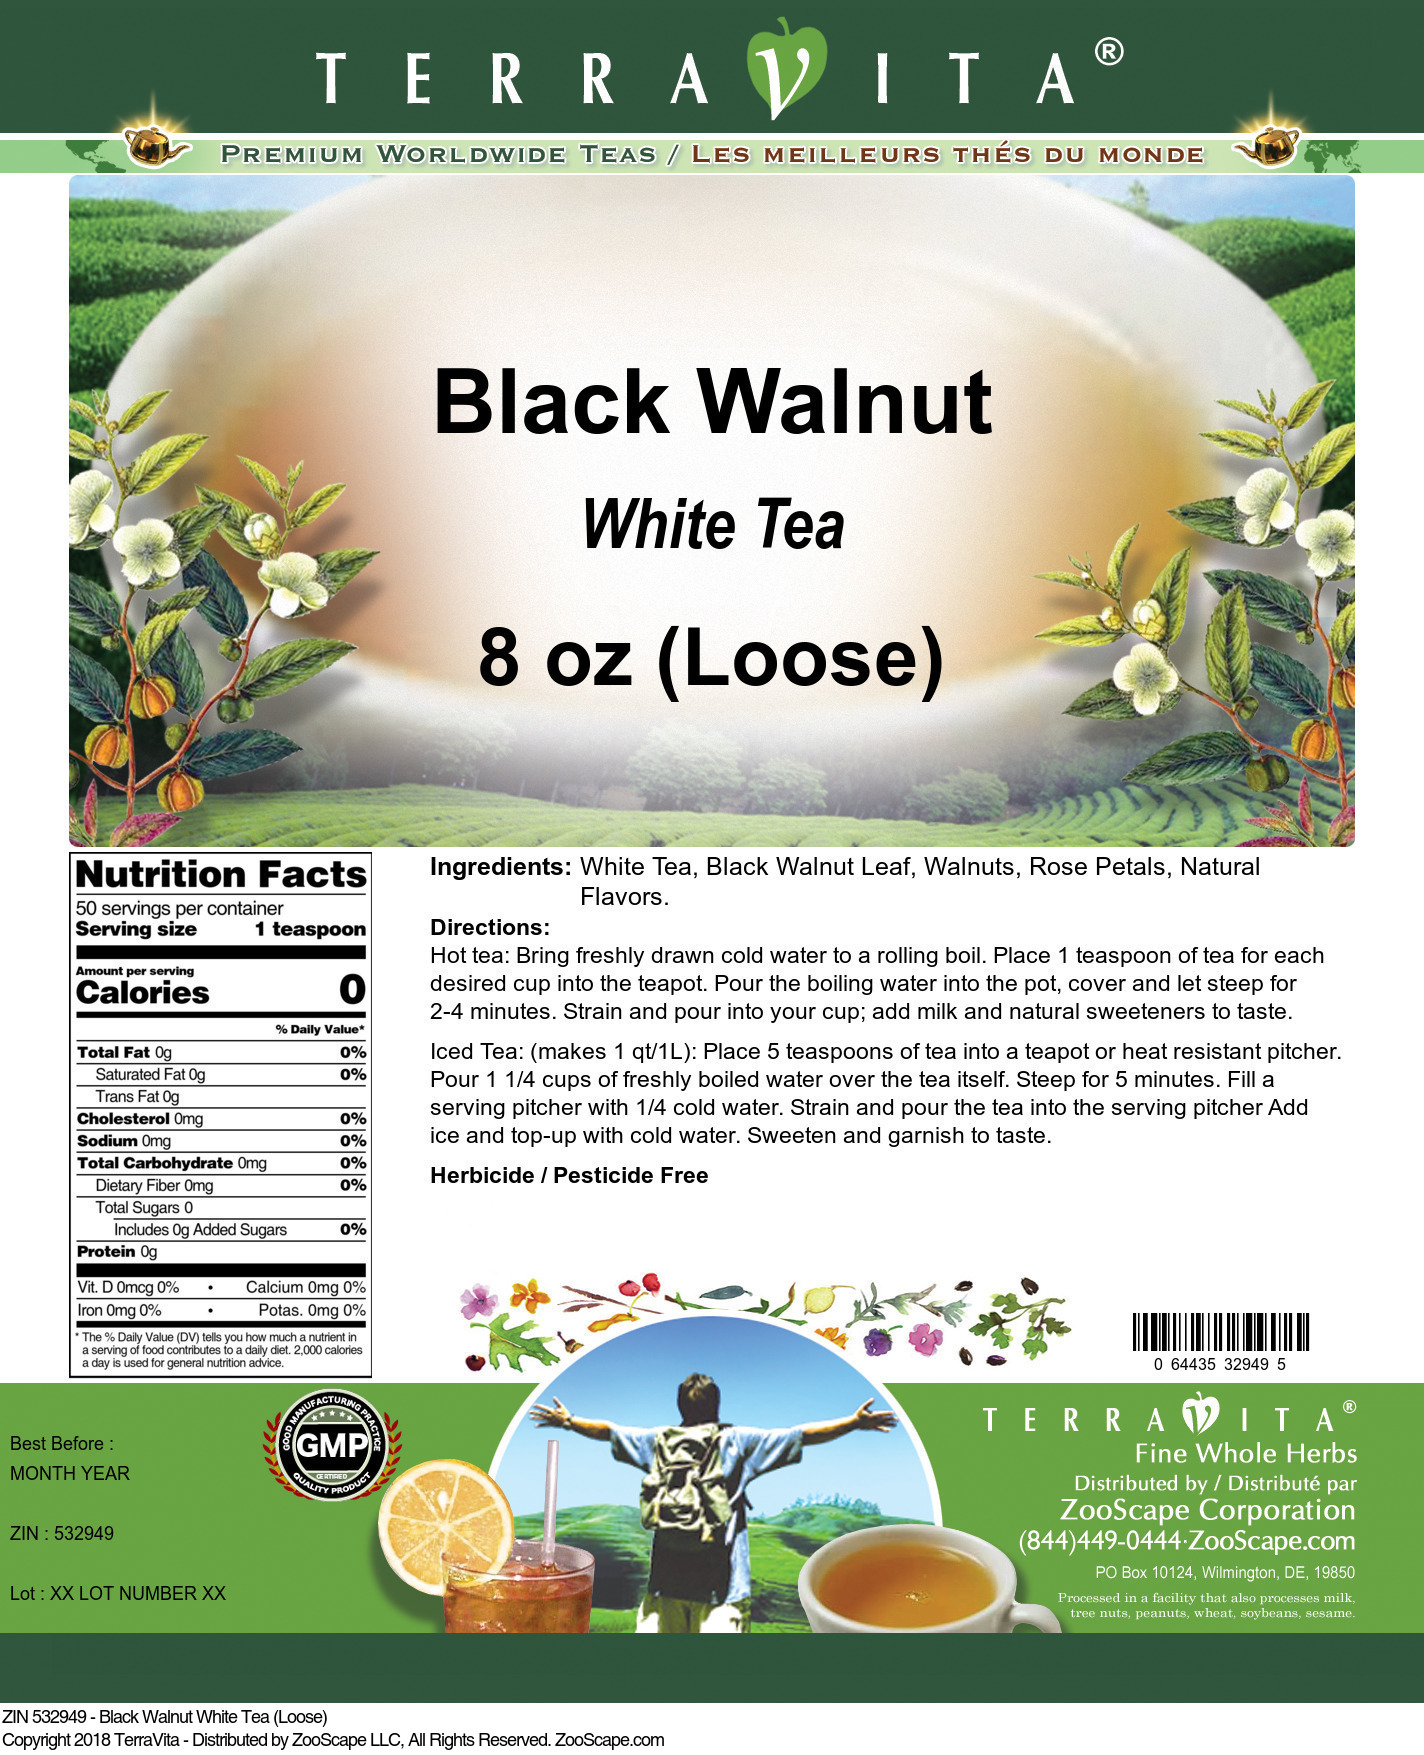 Black Walnut White Tea (Loose) - Label